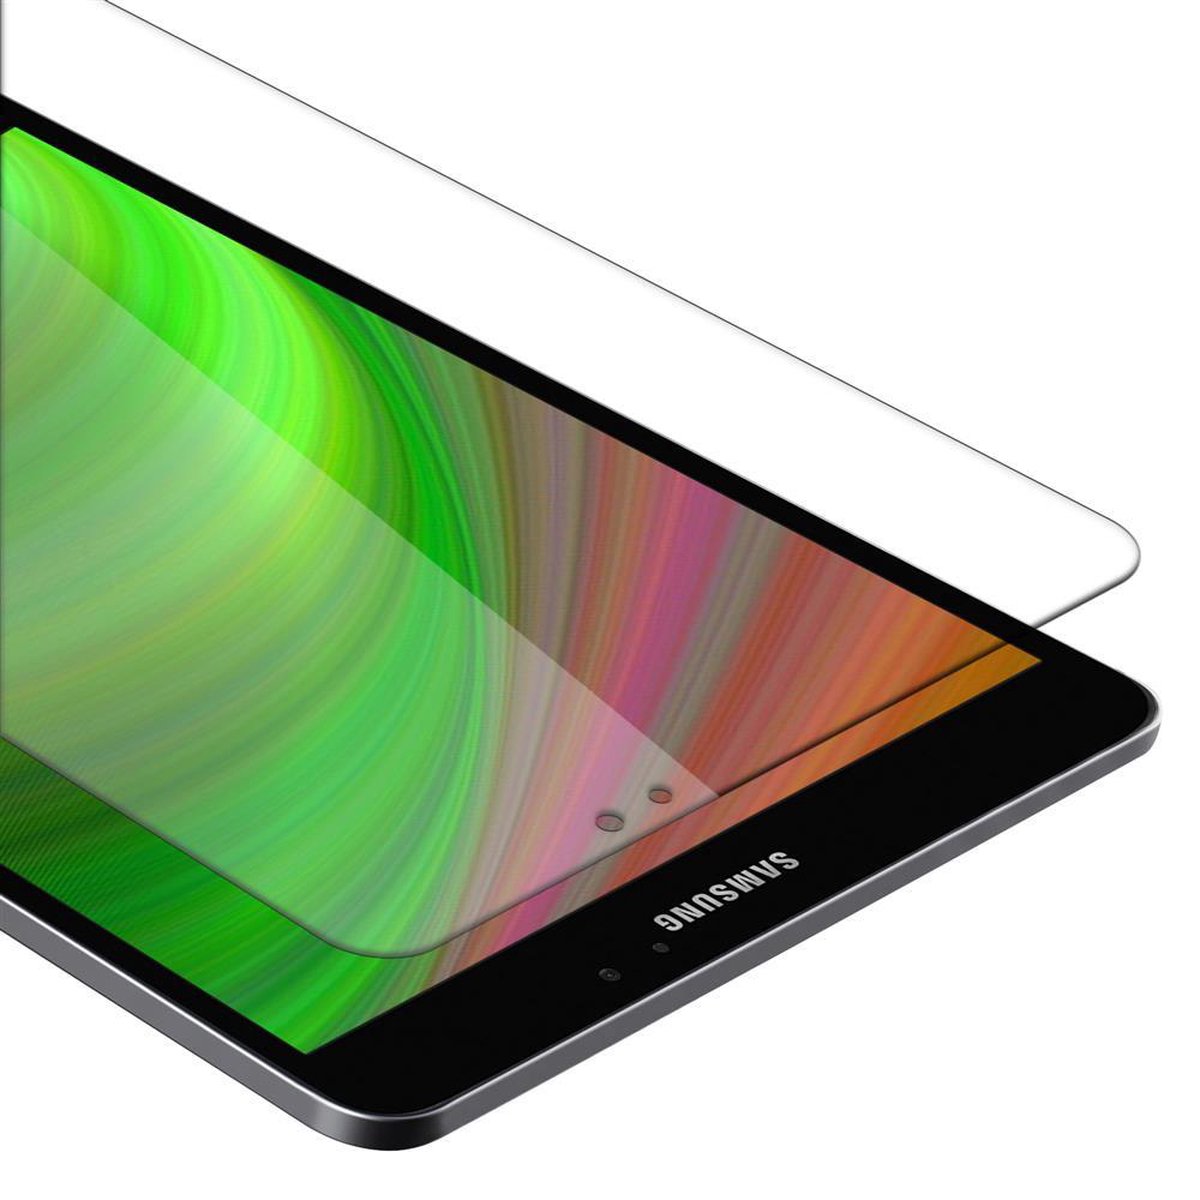 Cadorabo Screenprotector voor Samsung Galaxy Tab S3 (9.7 inch) in KRISTALHELDER - Gehard (Tempered) display Film beschermglas in 9H hardheid met 3D Touch